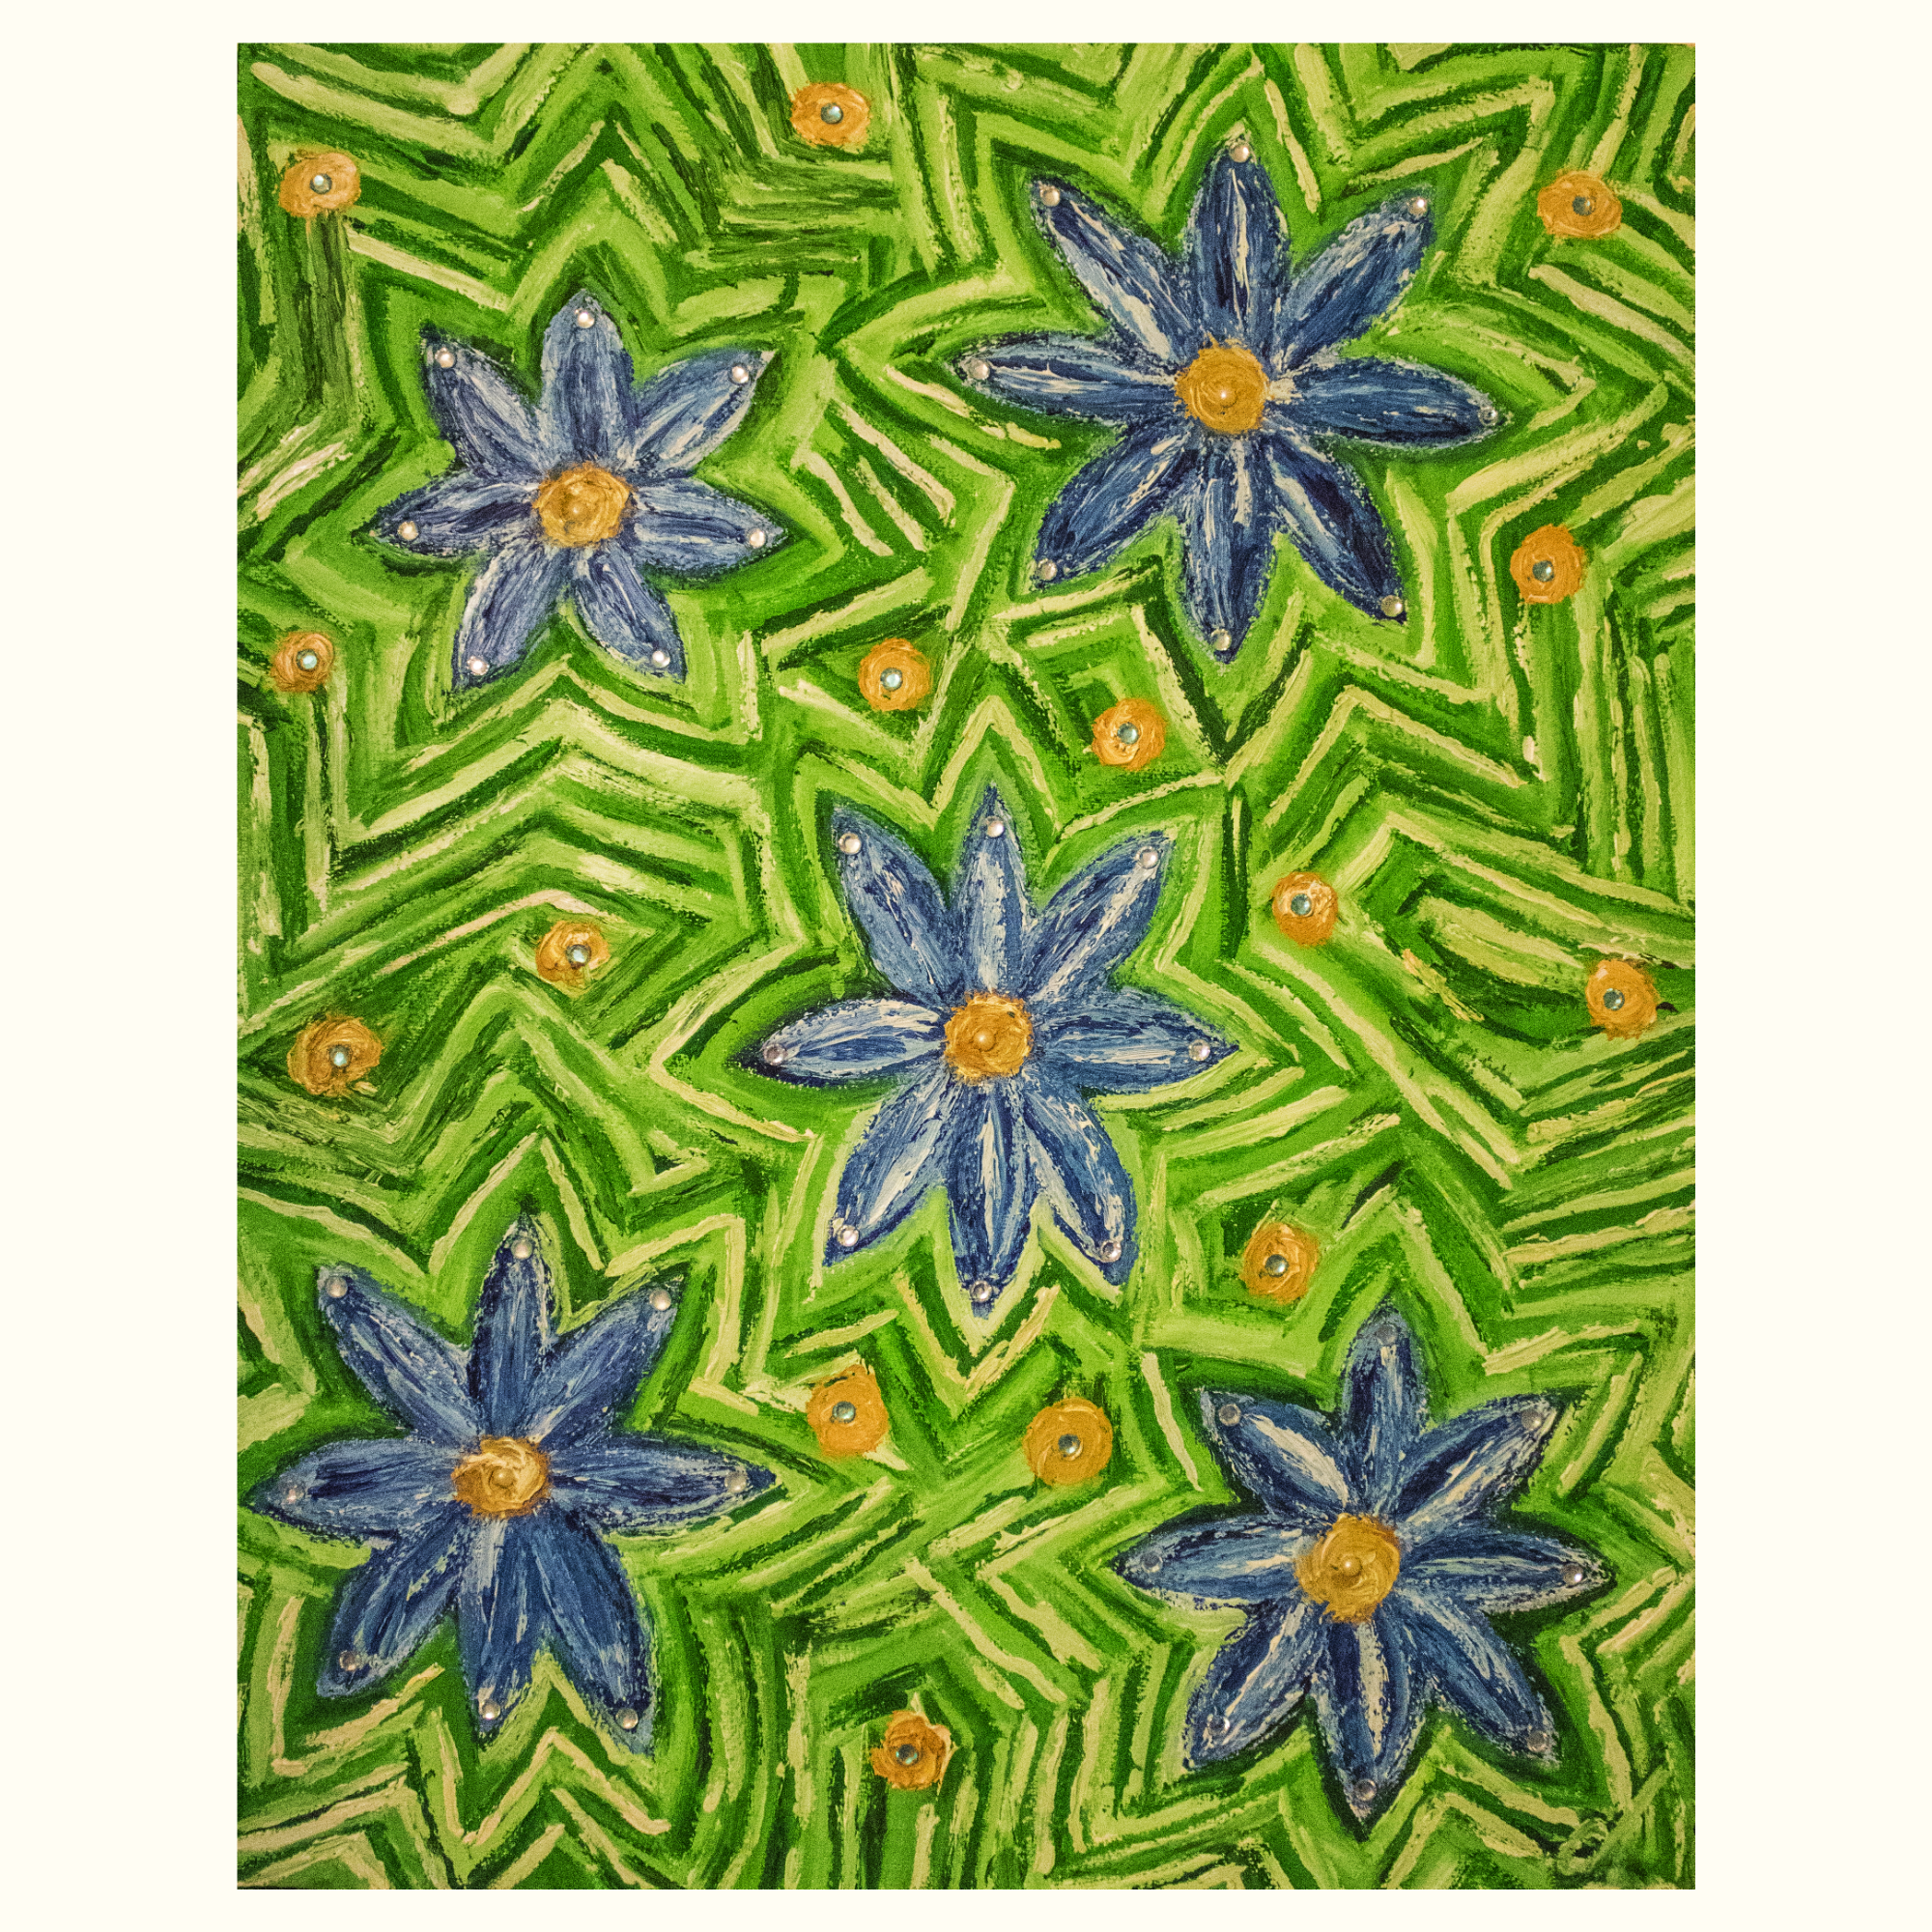 Lotus Mixed Blooms Media – Blue/Green